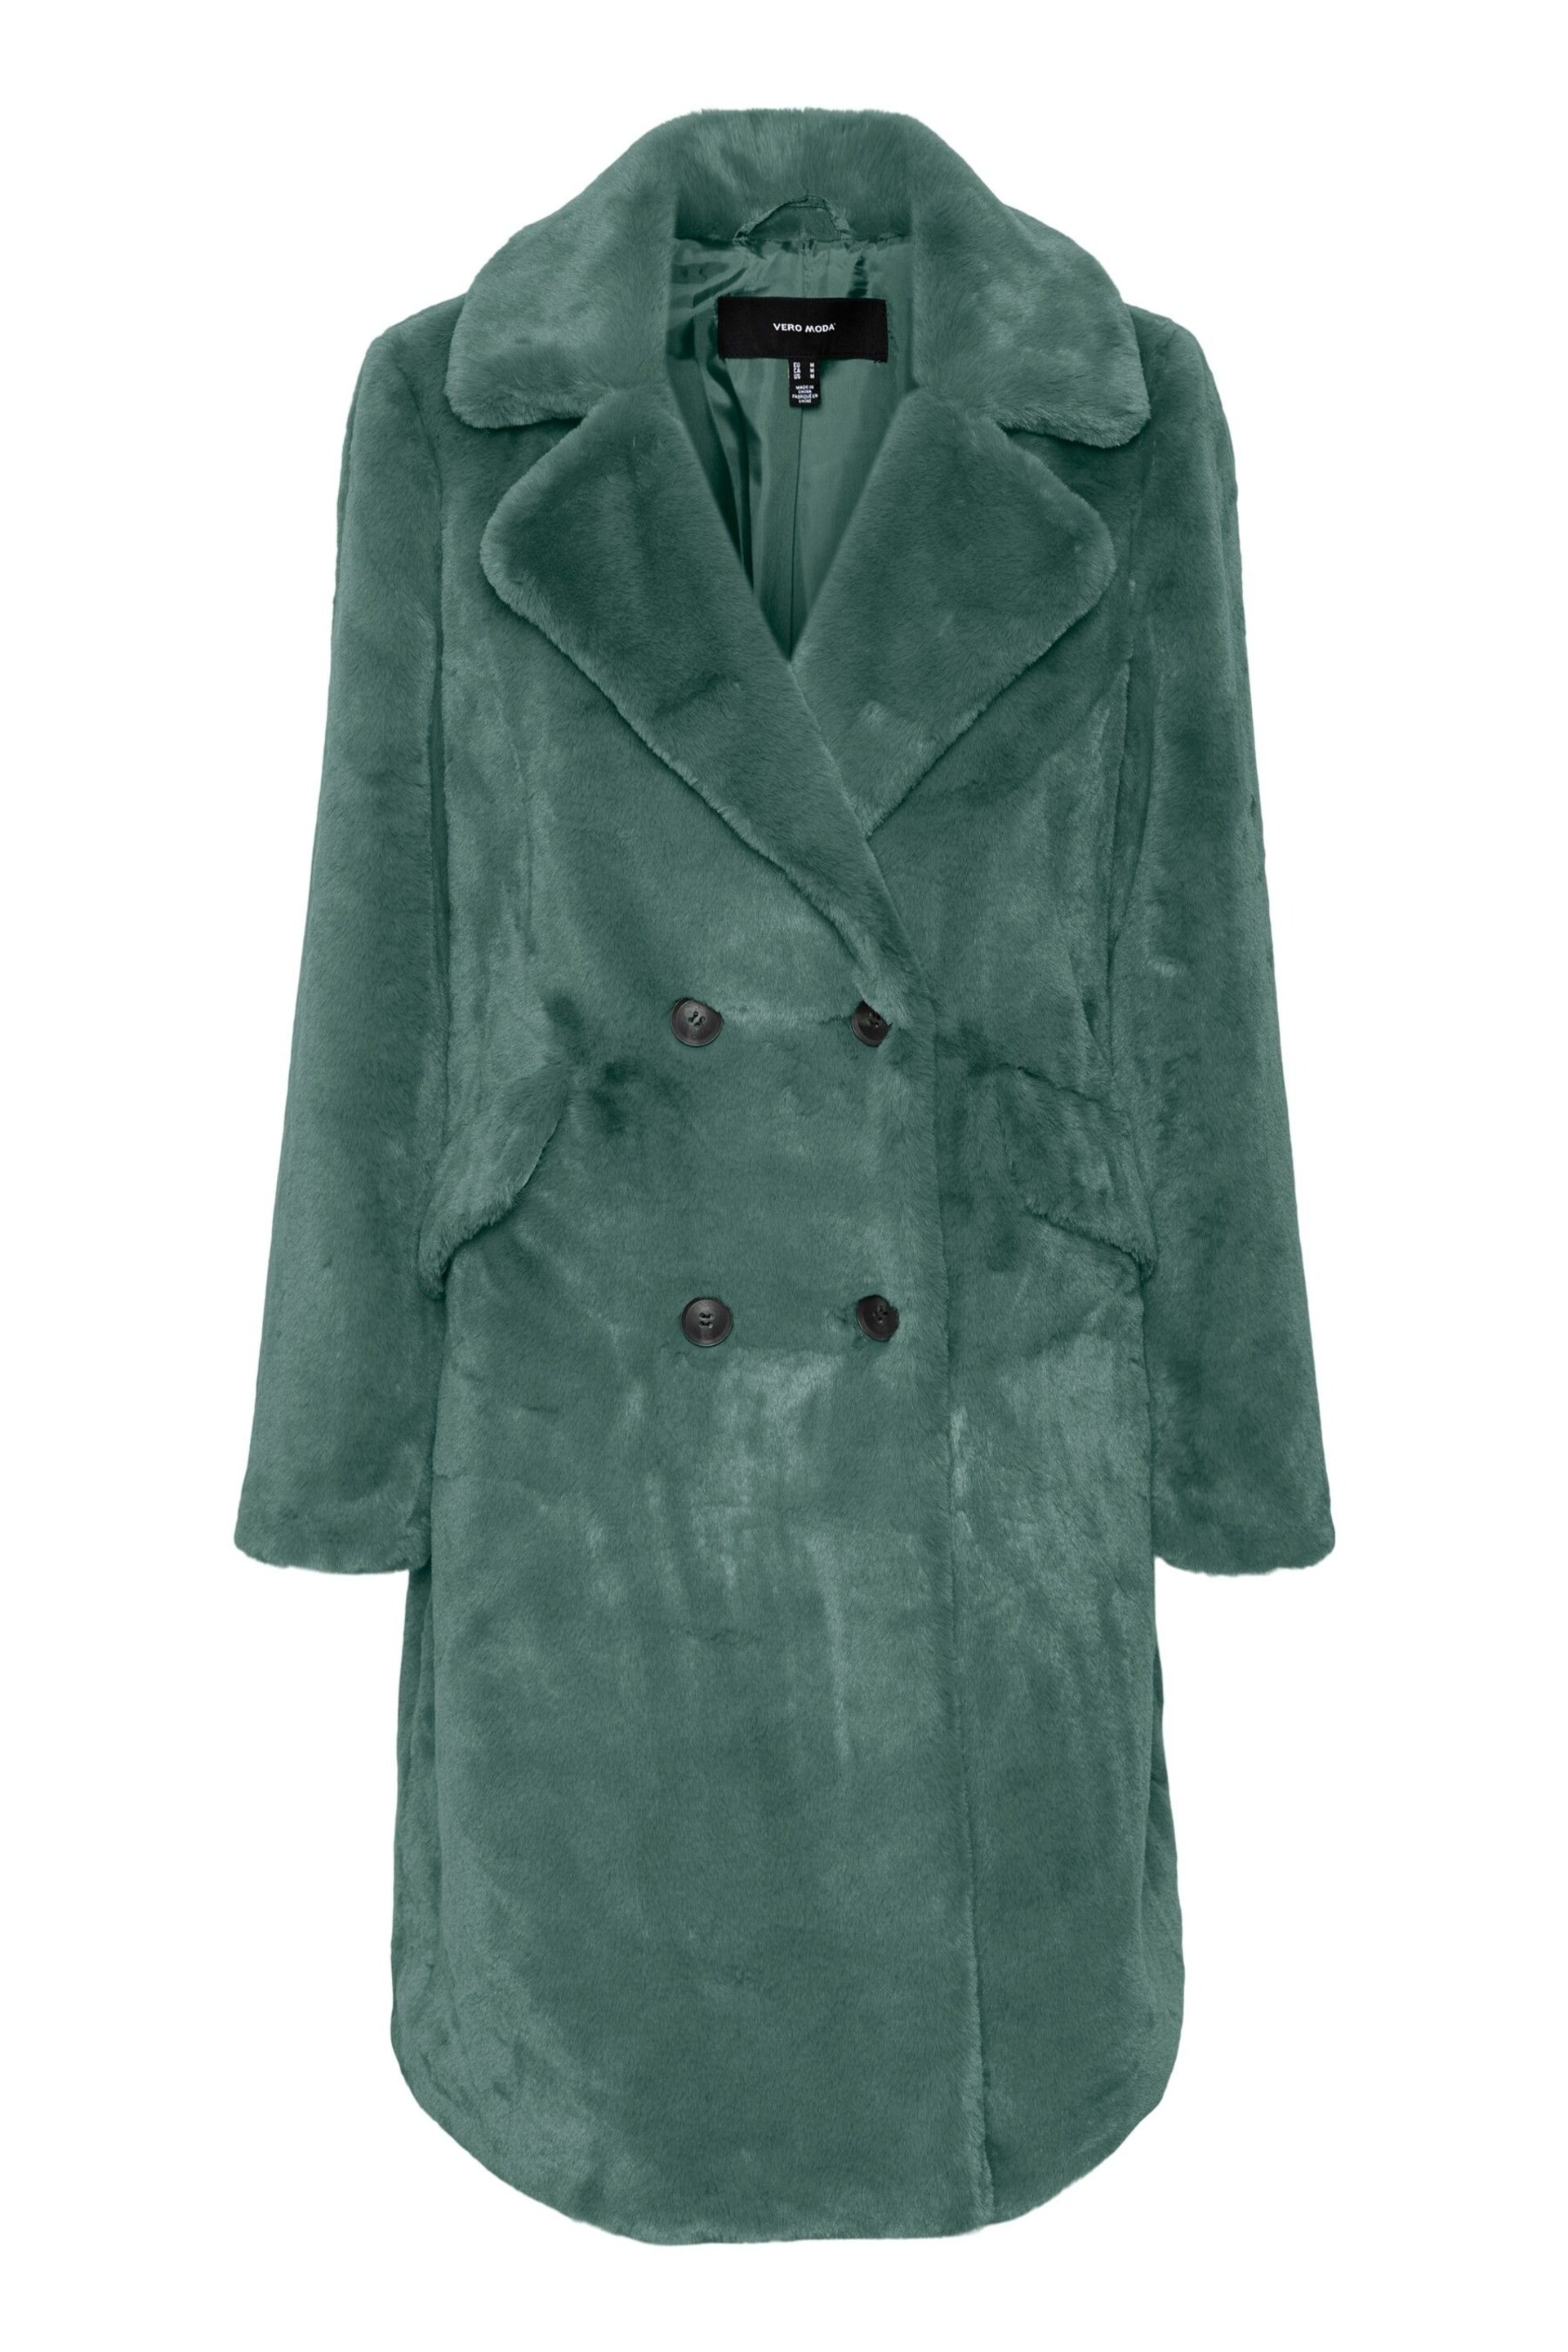 VERO MODA Green Longline Button Up Faux Fur Coat - Image 1 of 1